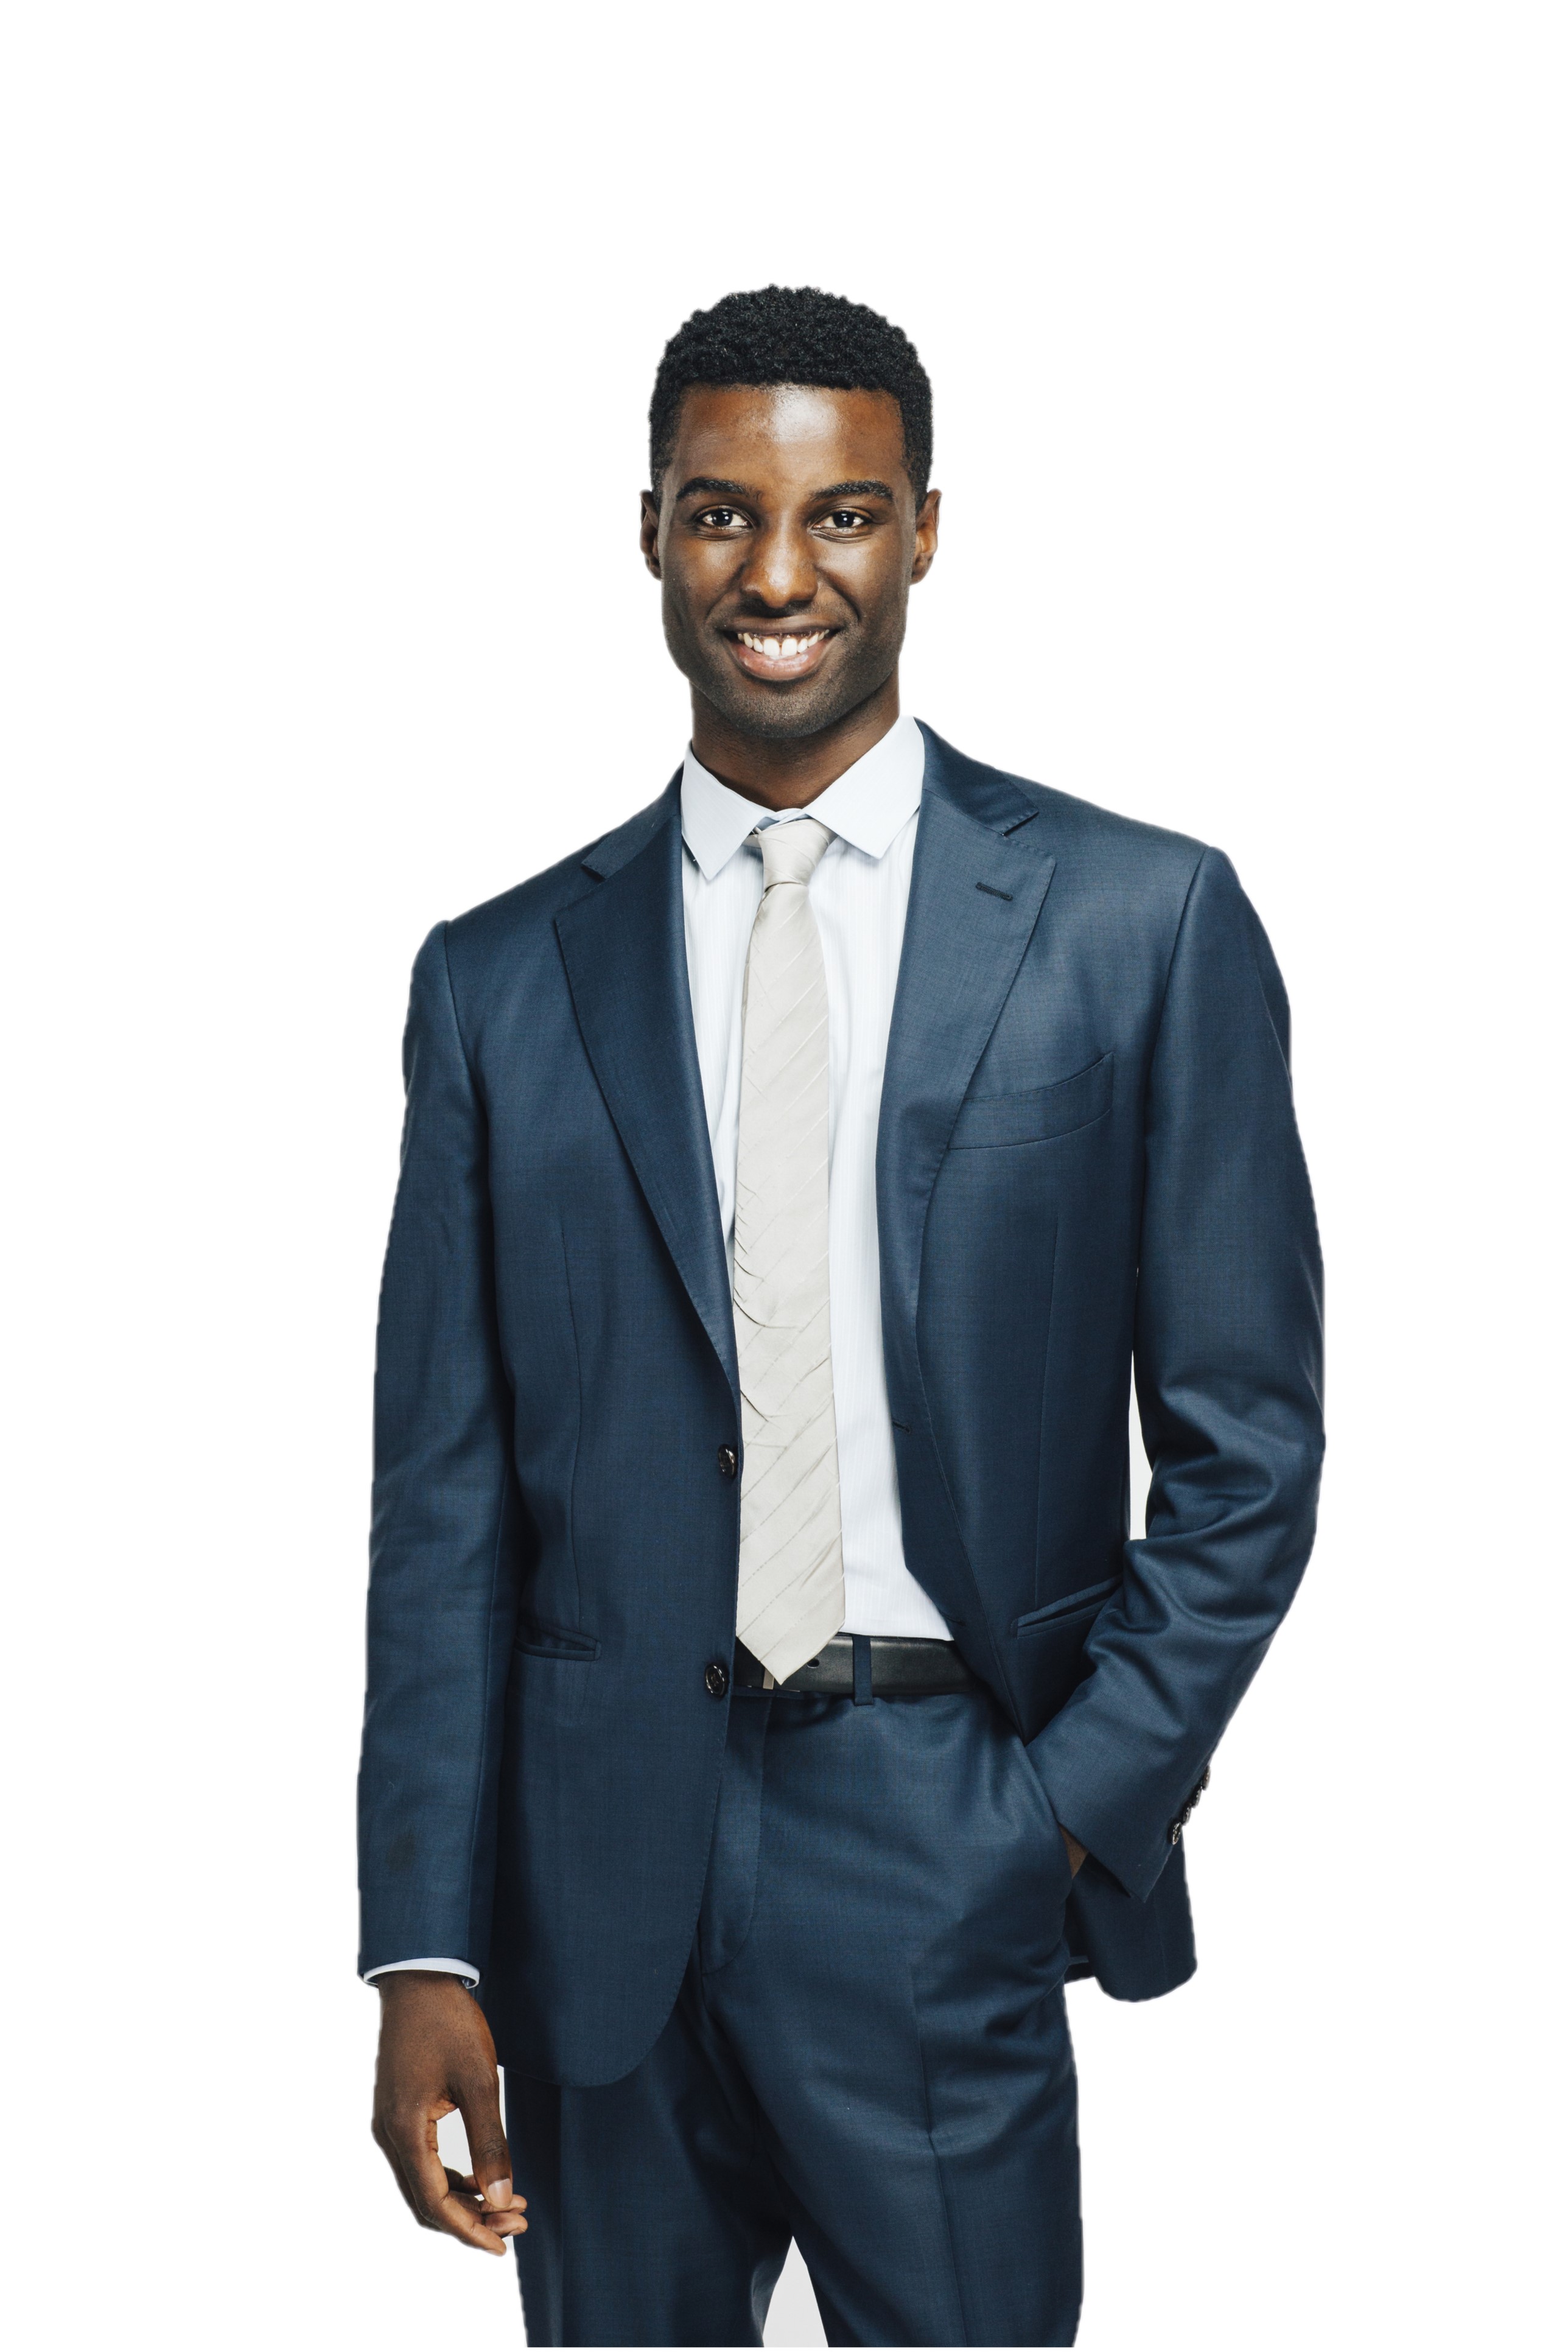 Black man smart business attire outfit attire 